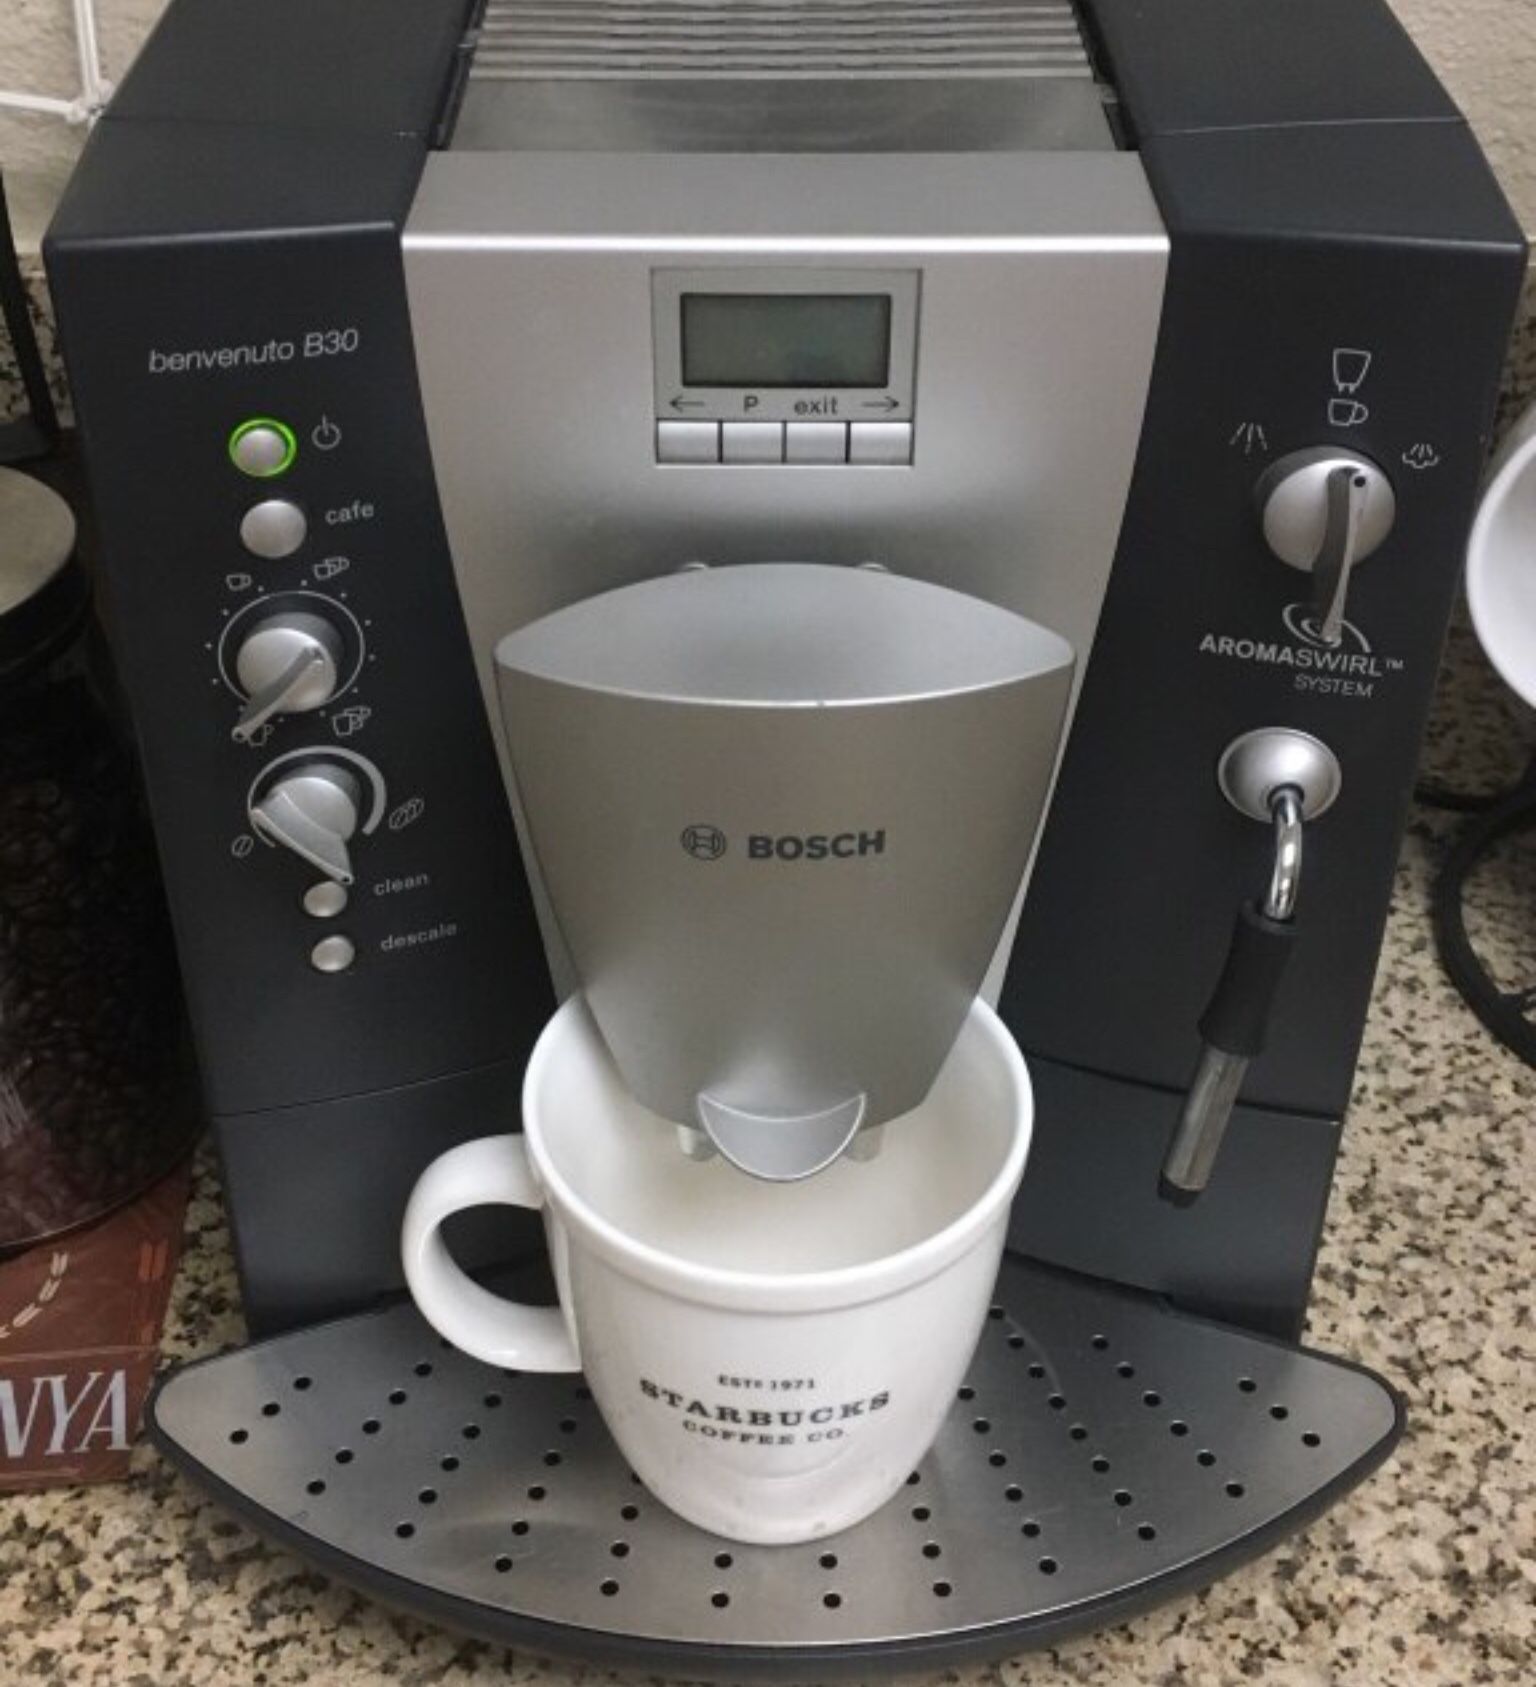 Bosch Benvenuto B30 Automatic Coffee Espresso Machine for Sarasota, FL - OfferUp